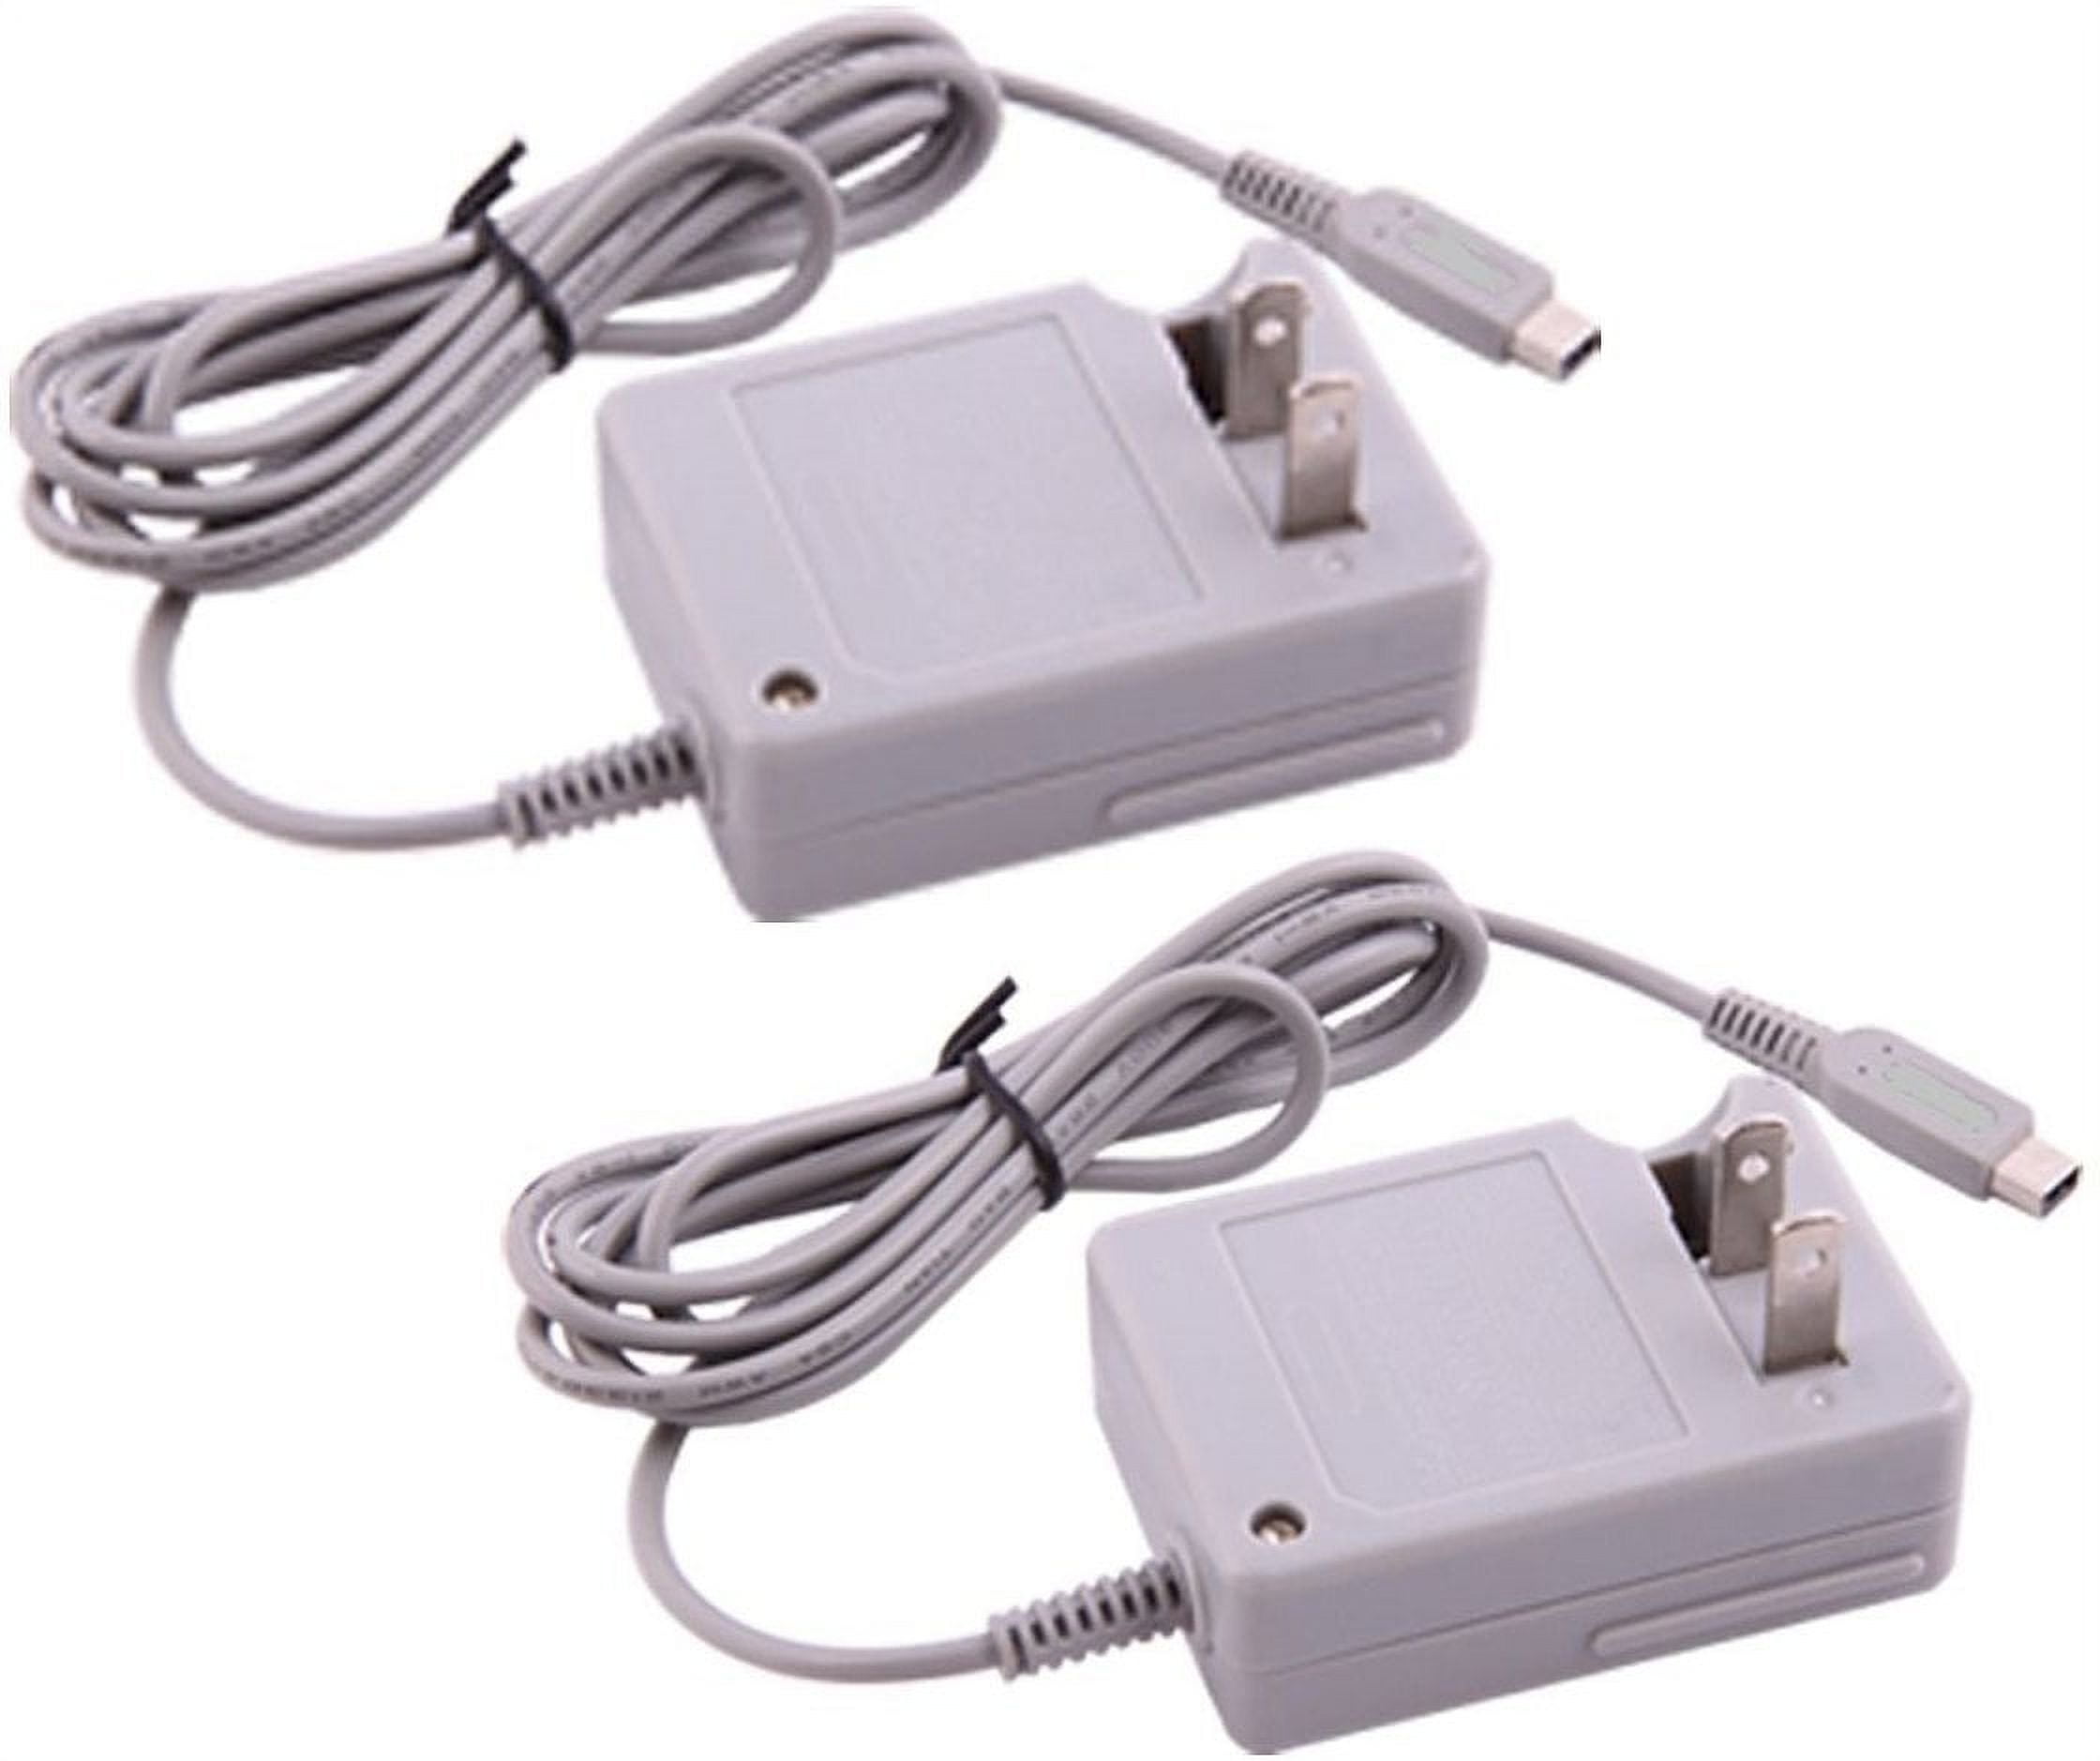 Ask Voltaic: Charging a Nintendo DSI